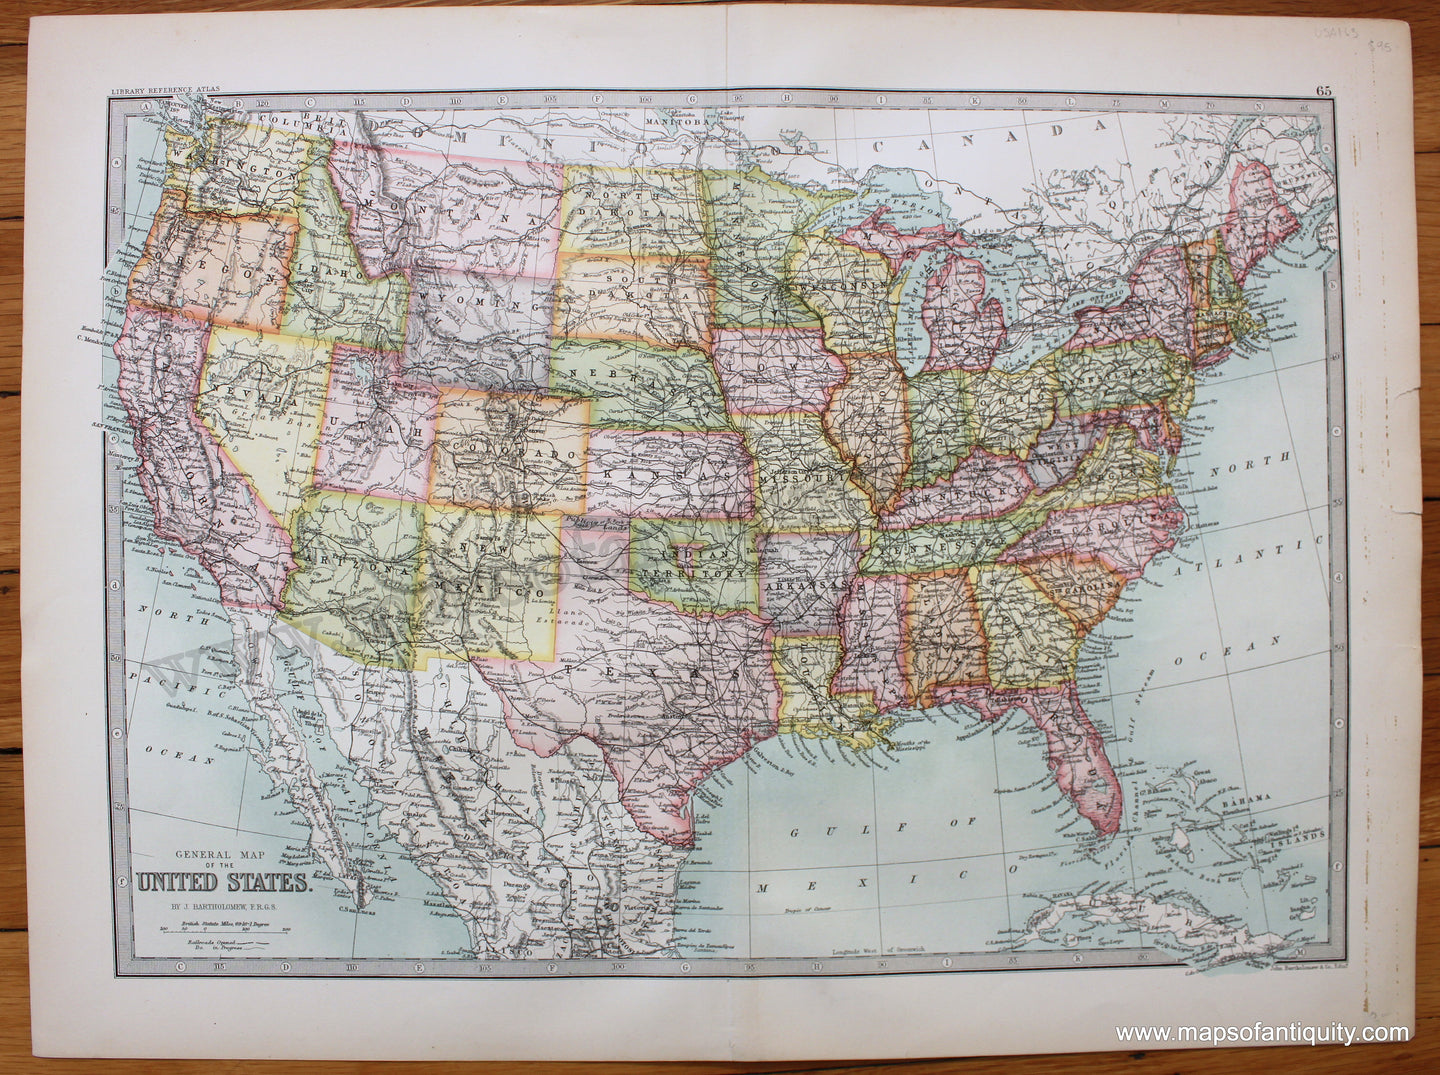 General-Map-of-the-United-States-Bartholomew-1890-1800s-19th-century-maps-of-antiquity